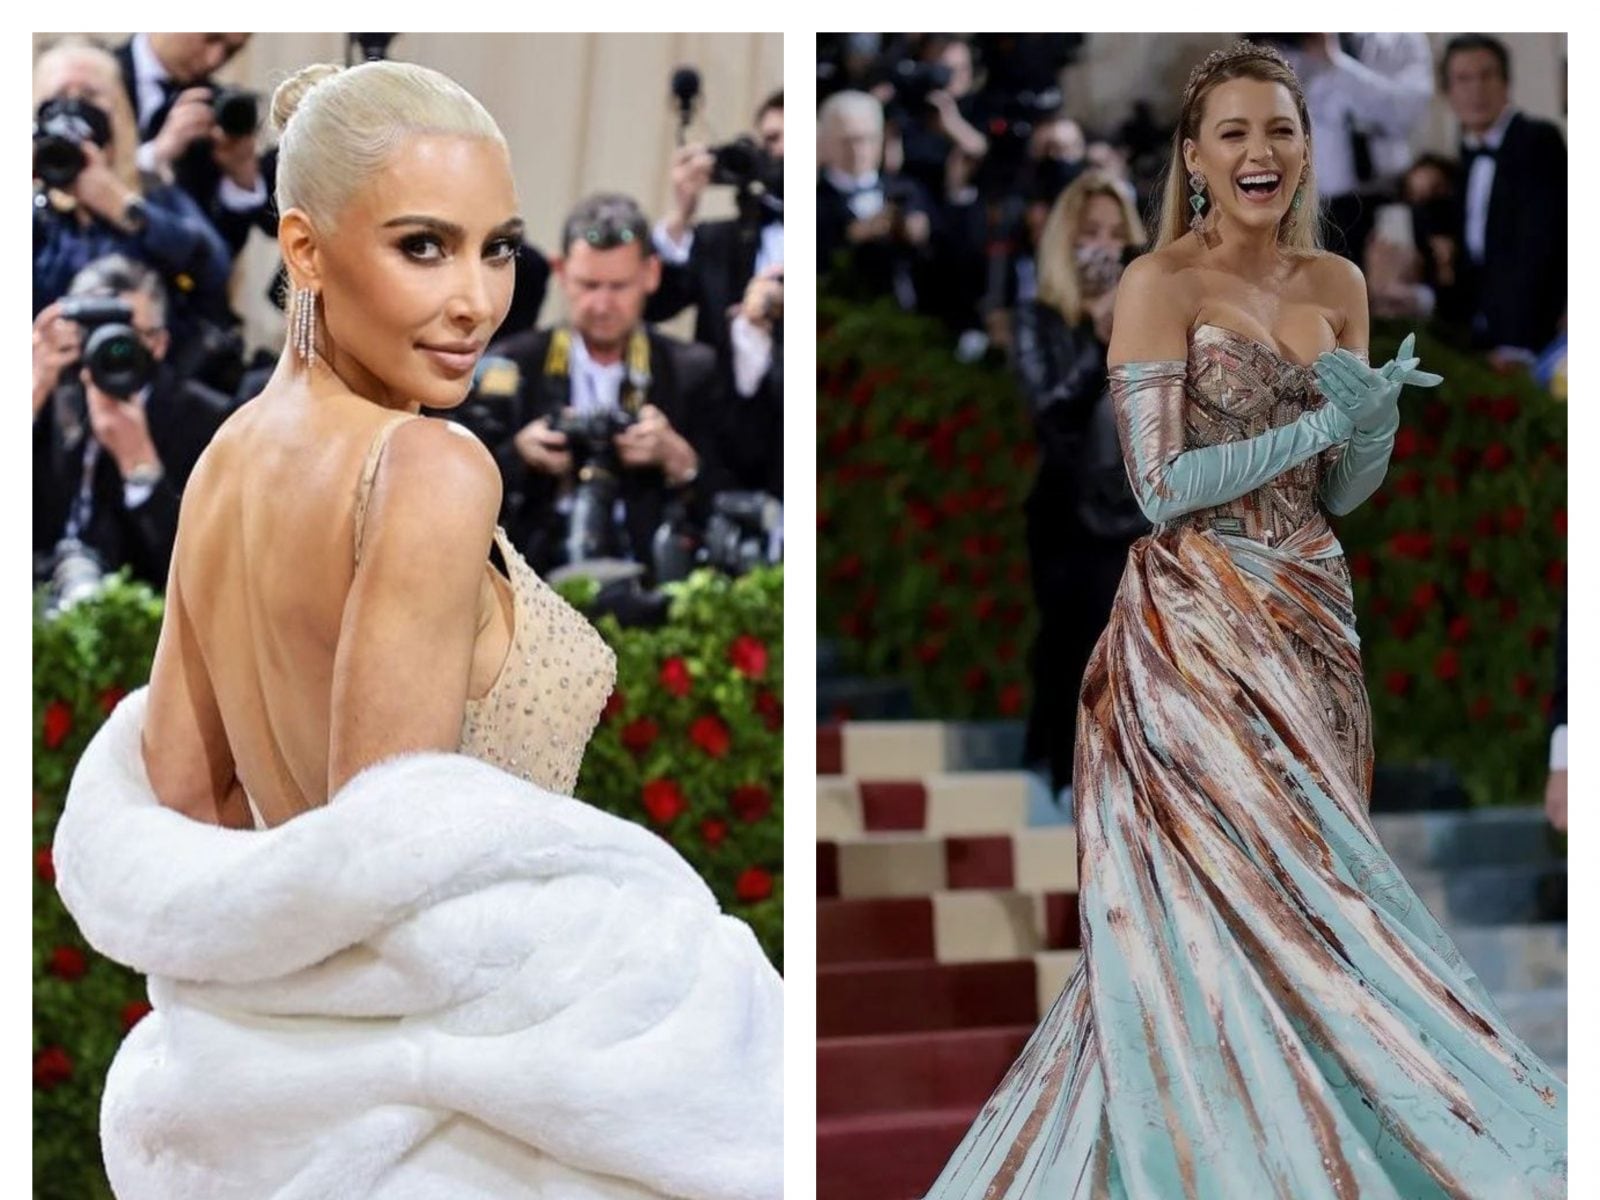 Met Gala 2022 best red carpet looks: Kim Kardashian, Katy Perry